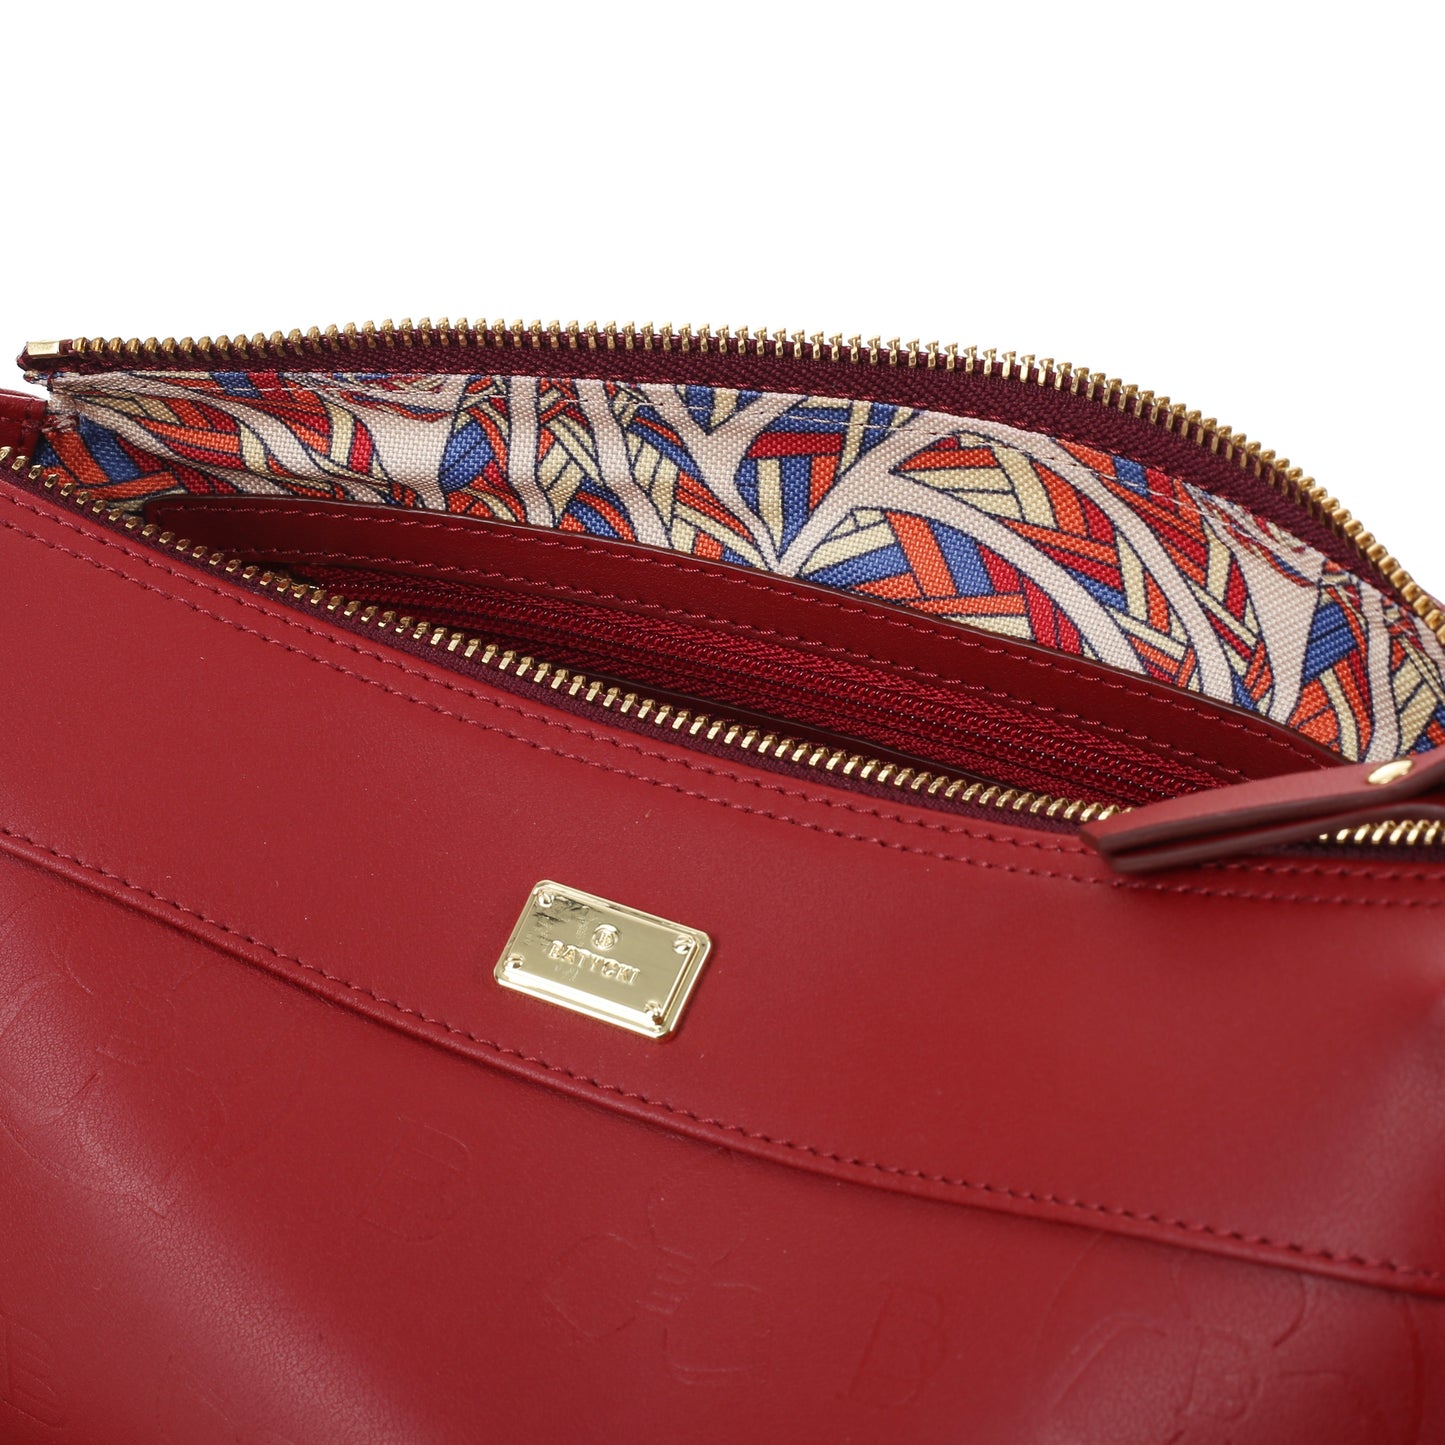 LEVRE NAPA CLARET women's leather handbag